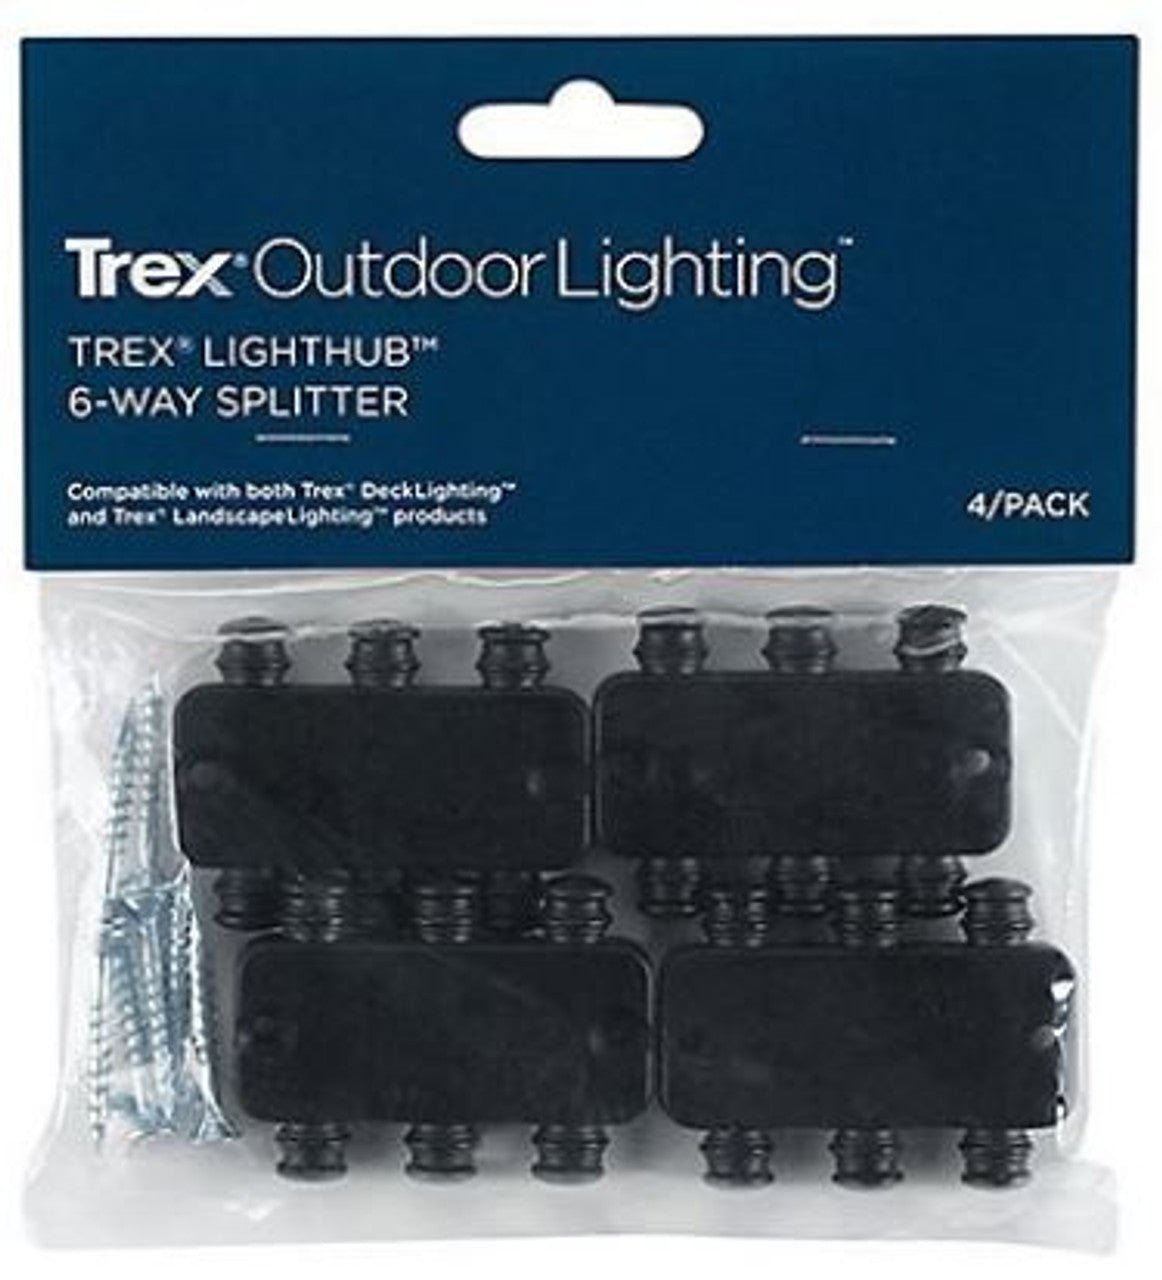 Trex® LightHub 6-Way Splitter in 4 pack